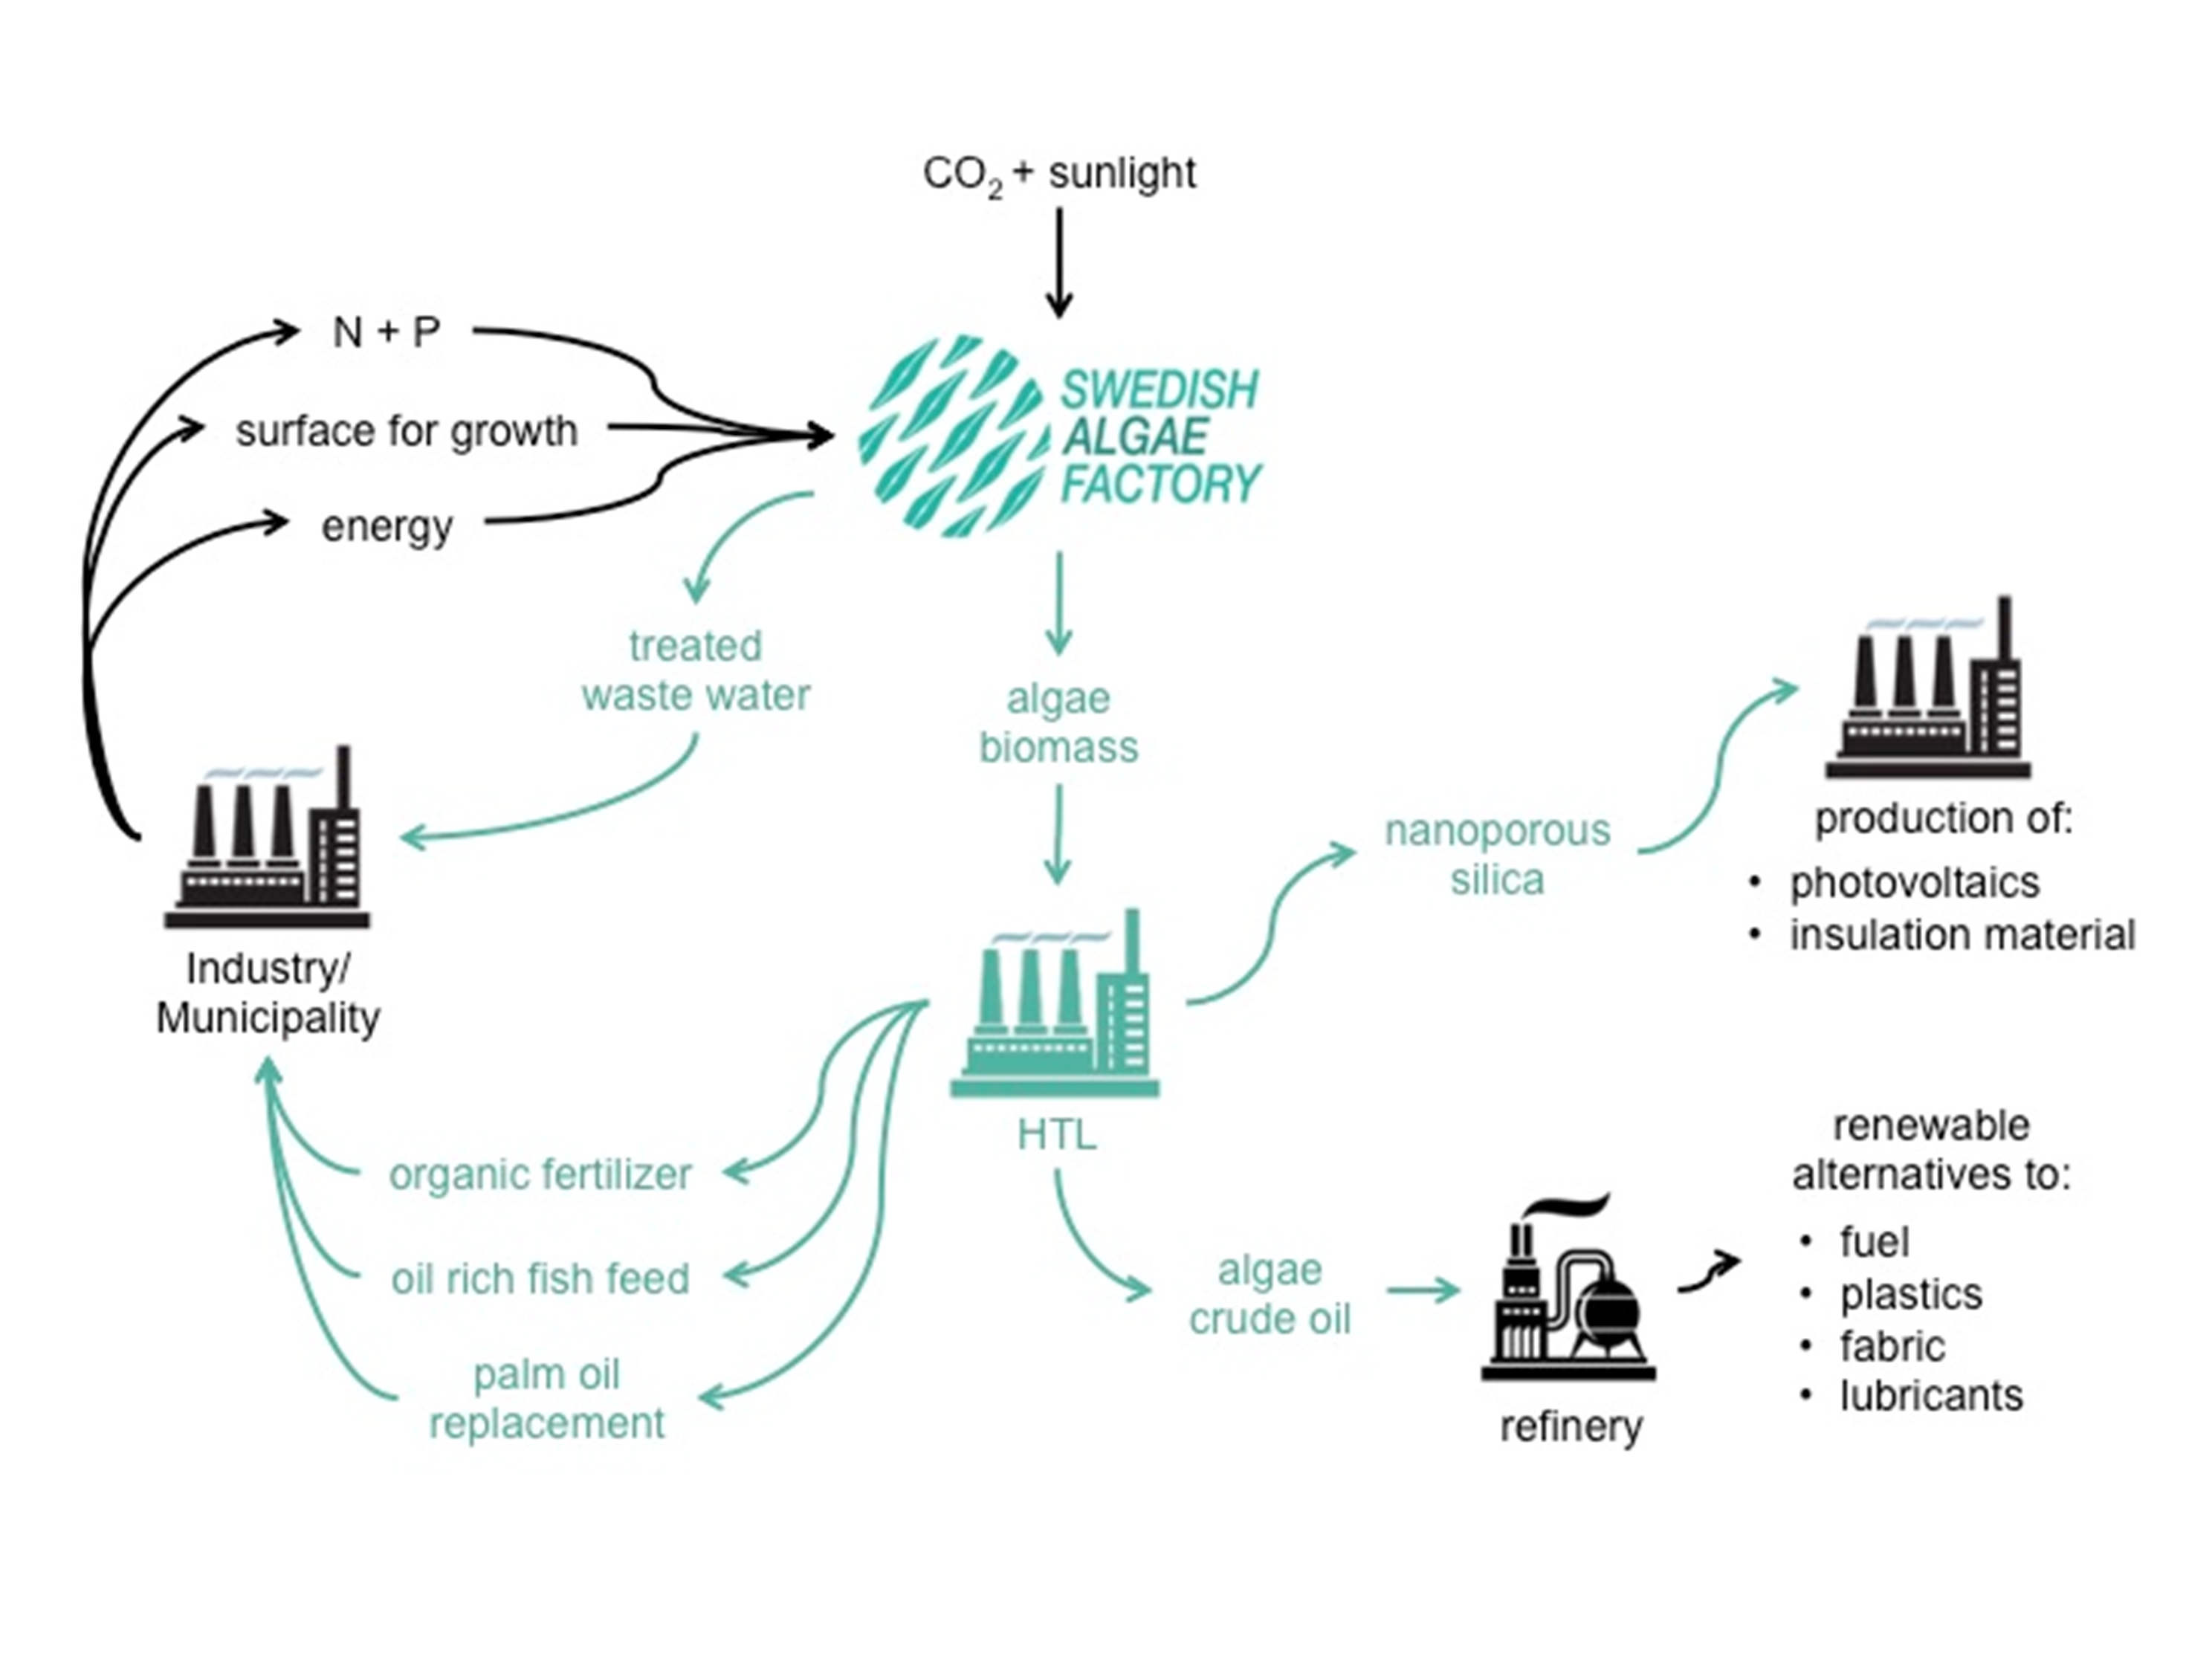 Swedish Algae Factory’s example of a circular business model based on algae’s natural life cycle